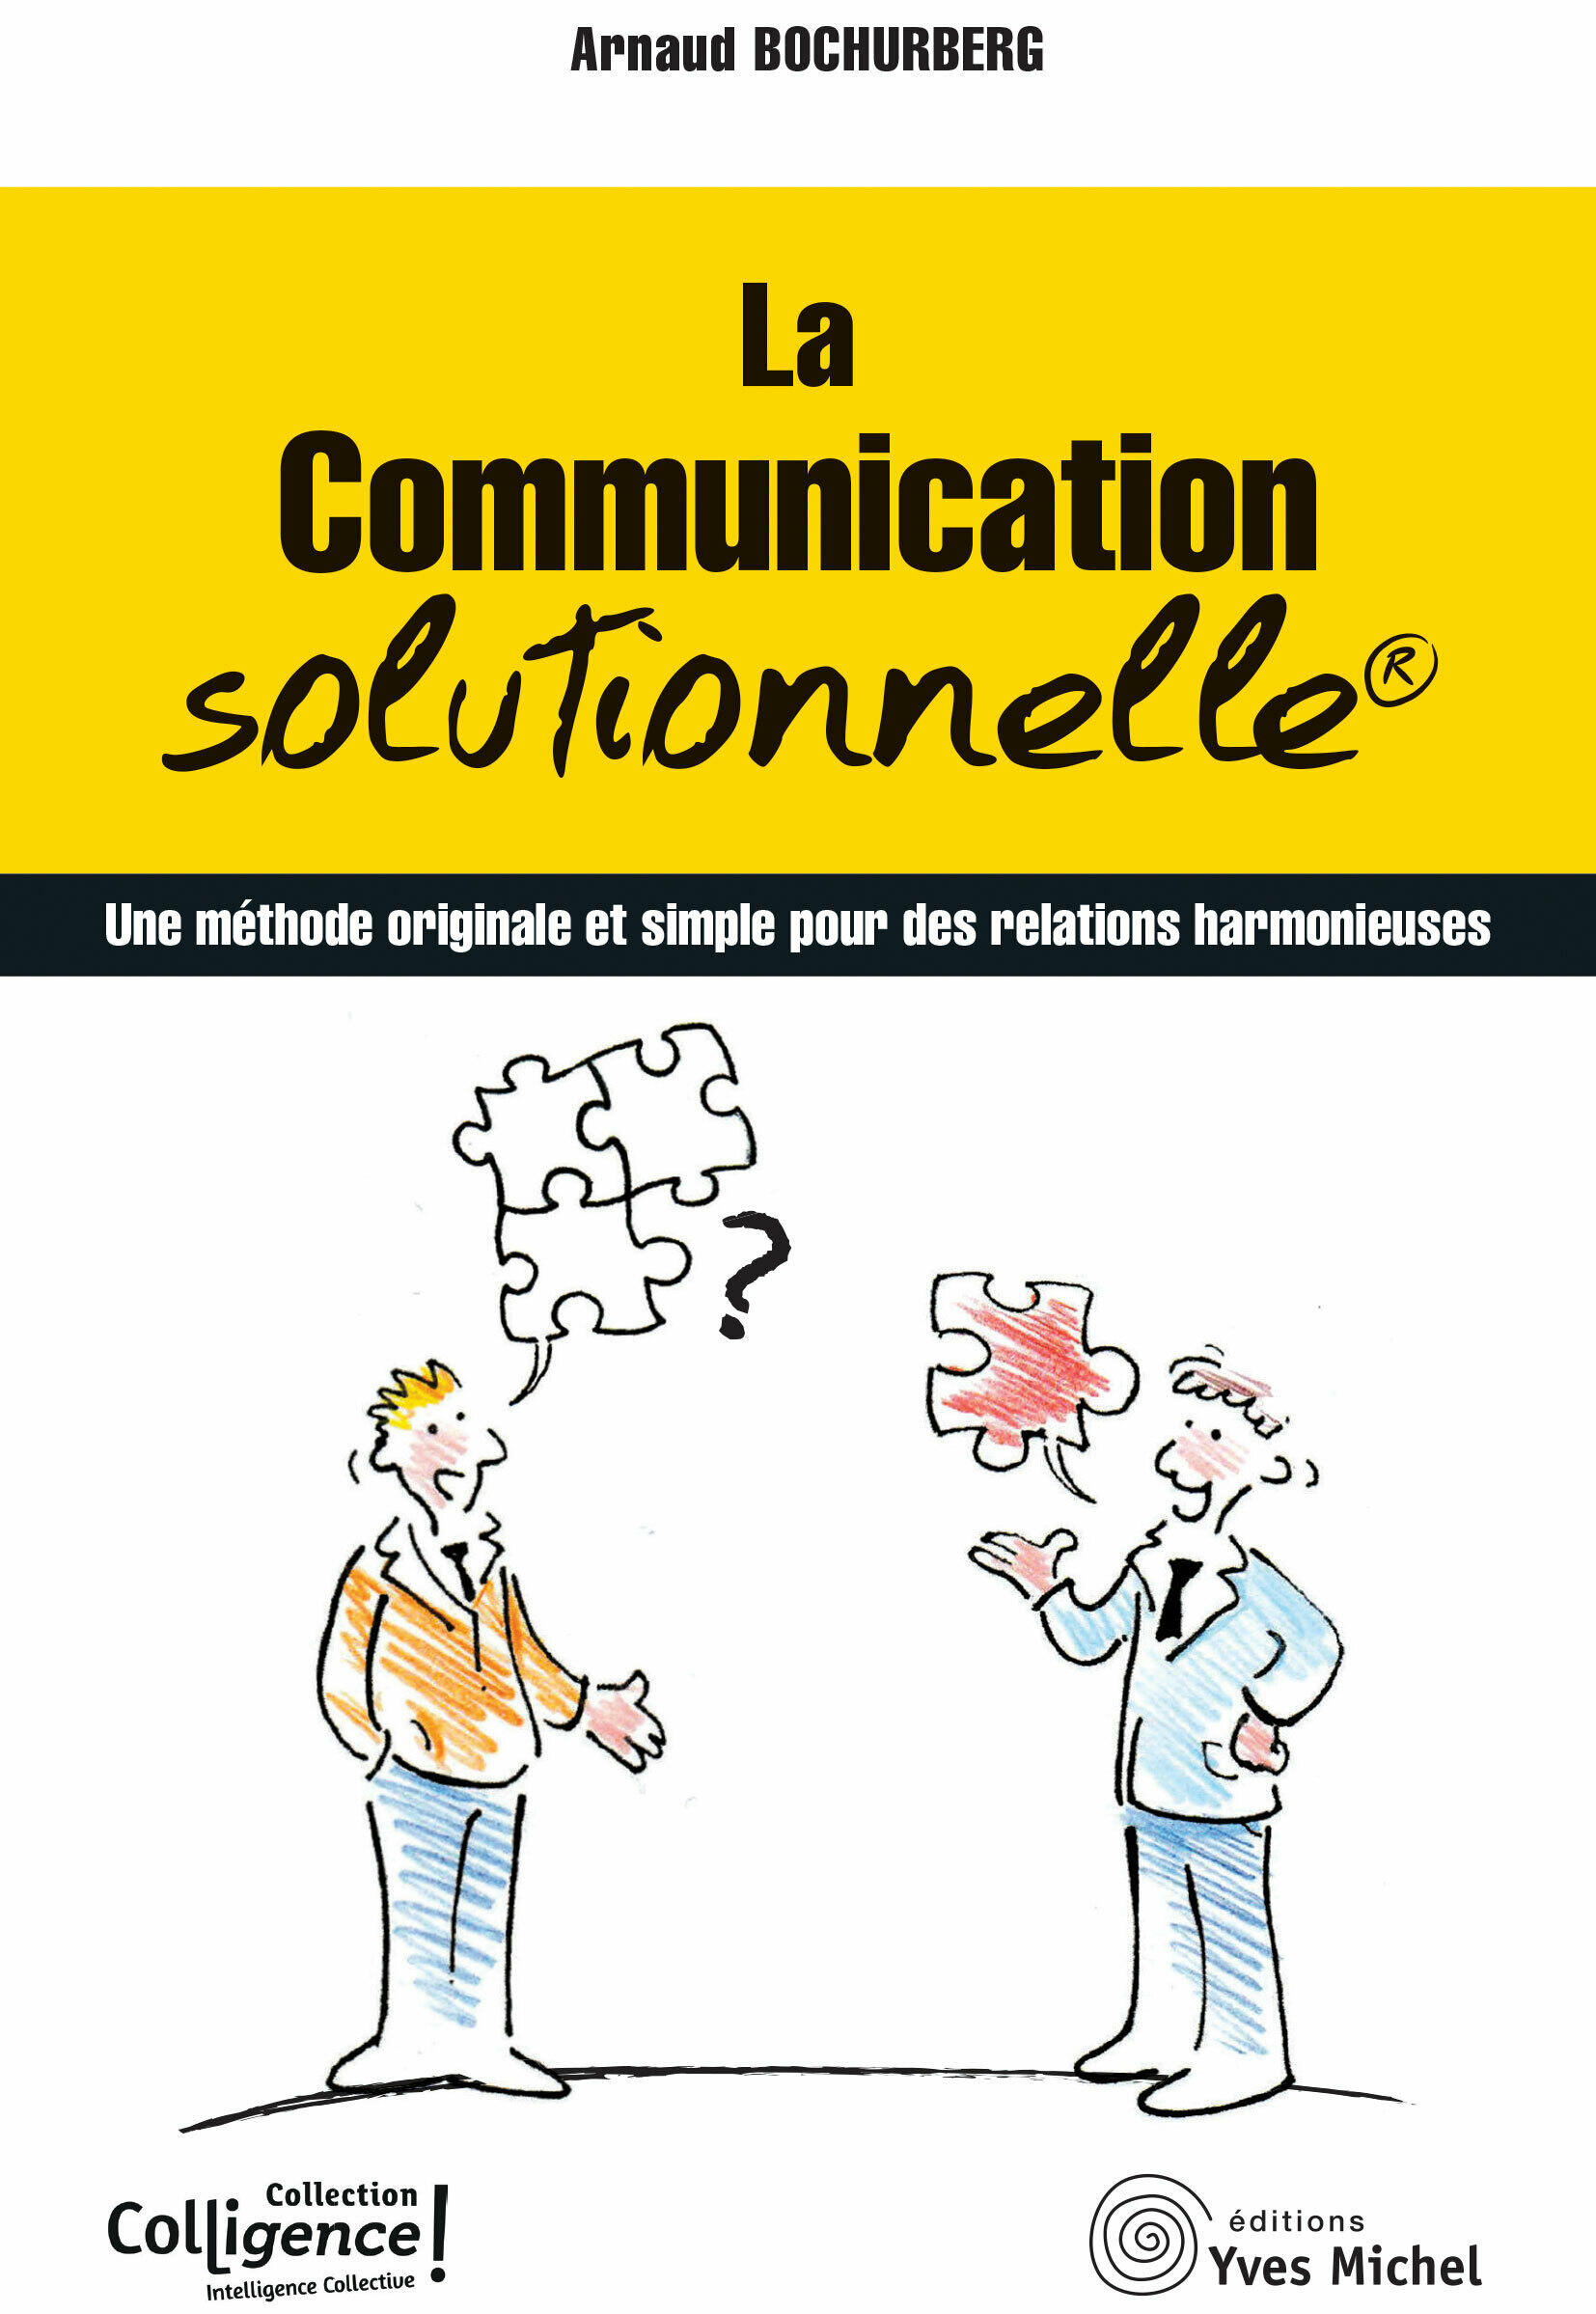 Communication focused on solution